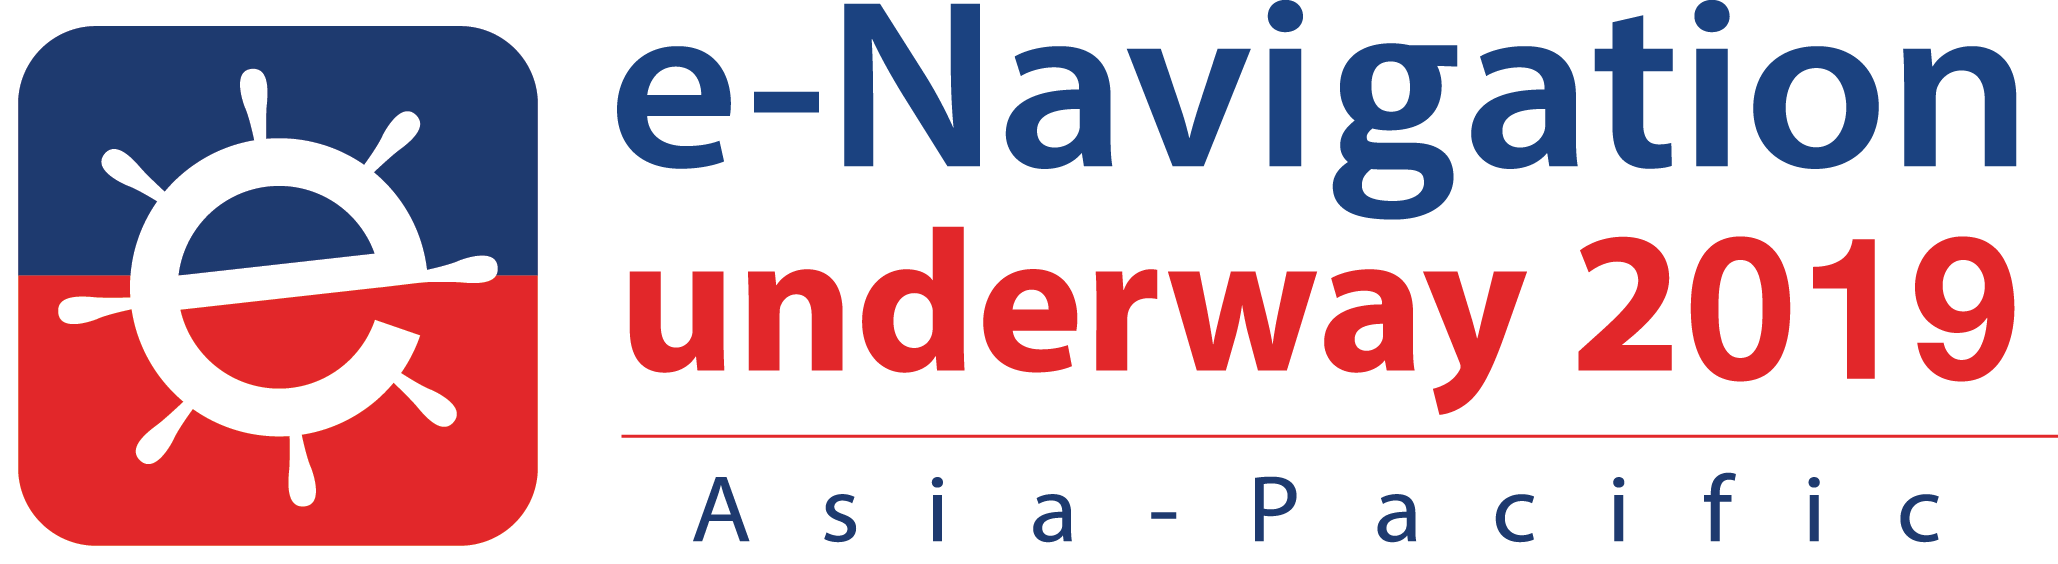 E Navigation Underway2019 Logo PNG